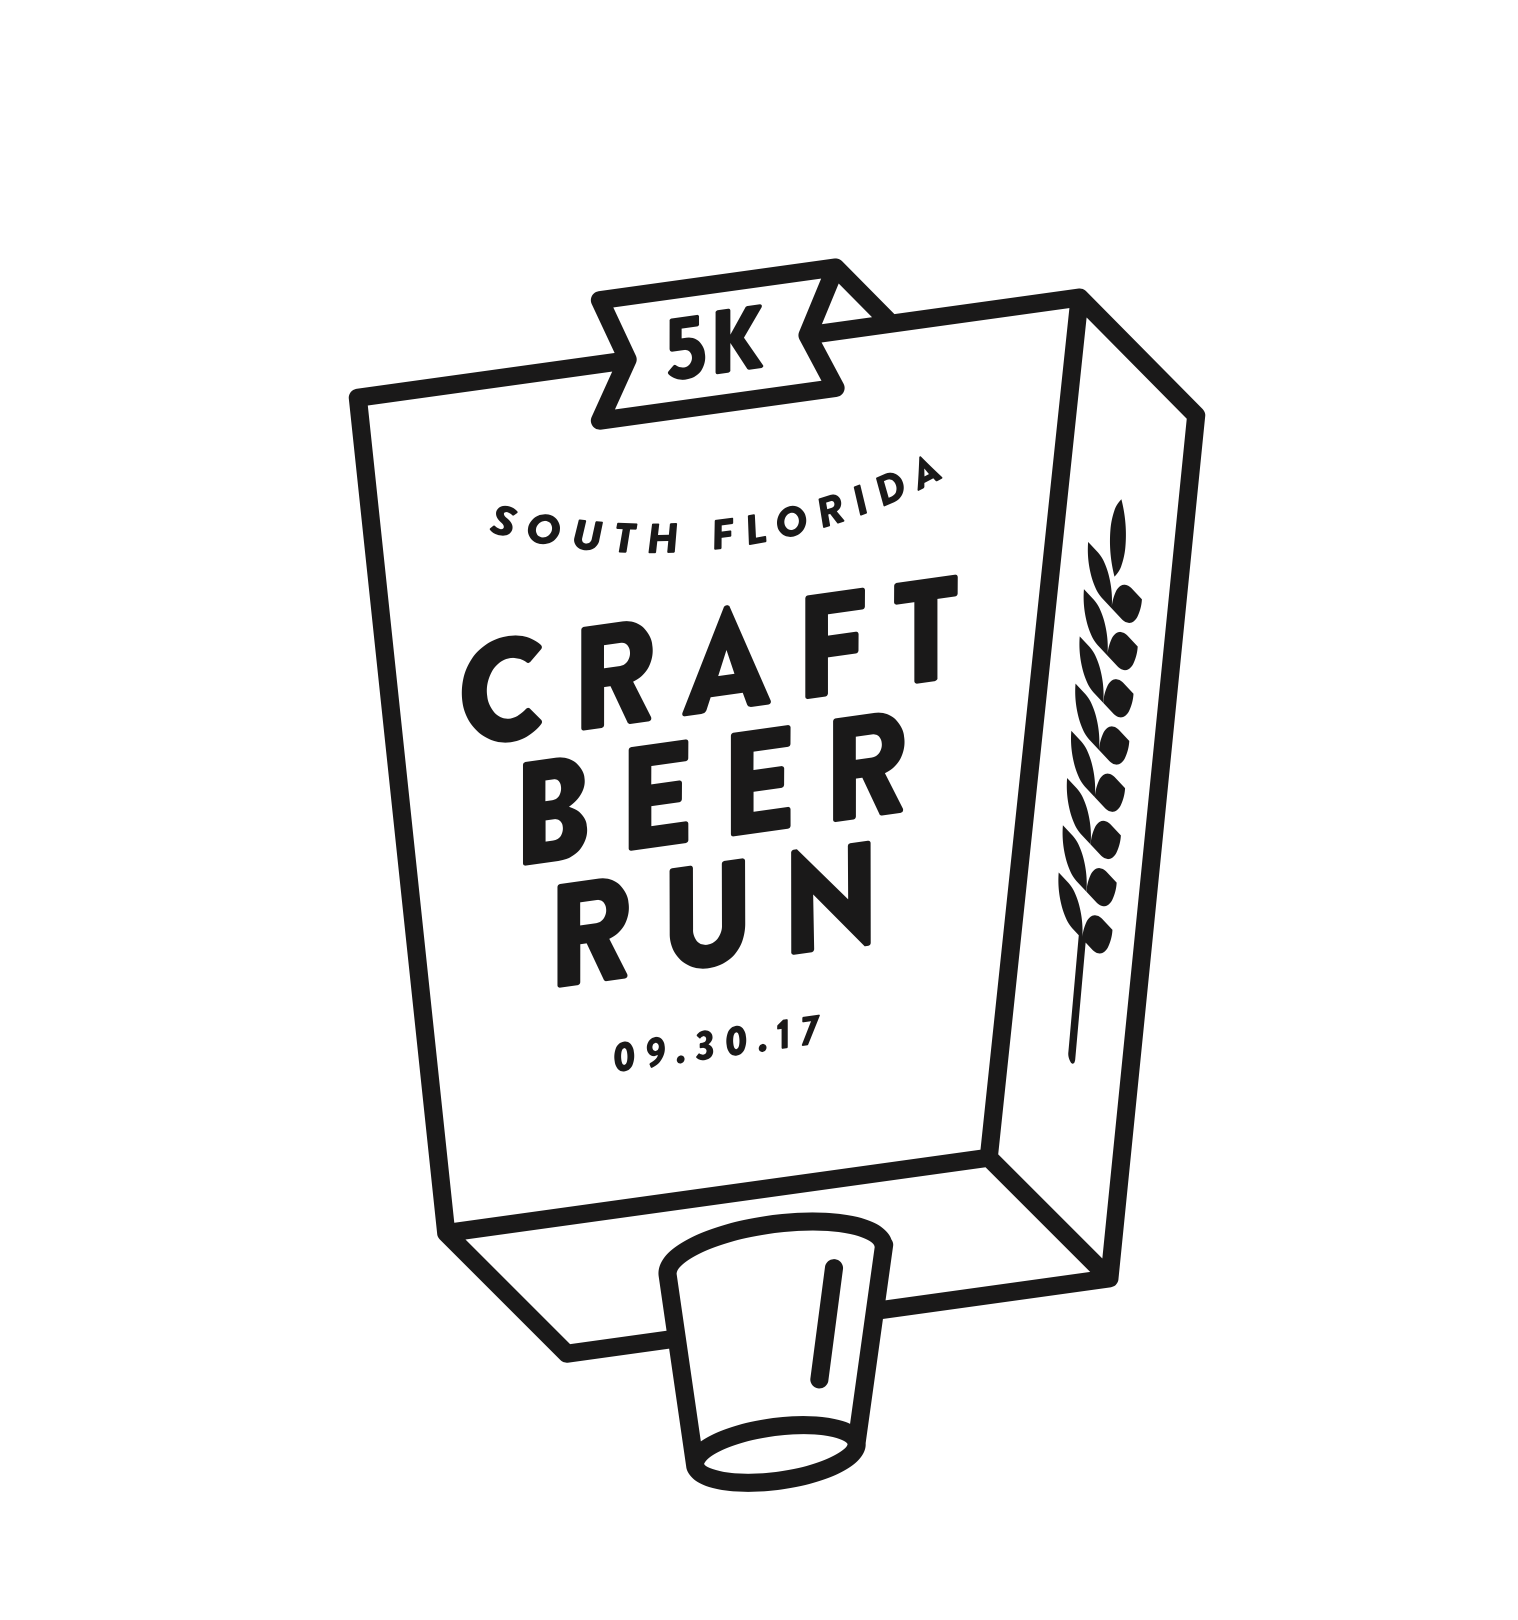 South Florida Craft Beer 5k